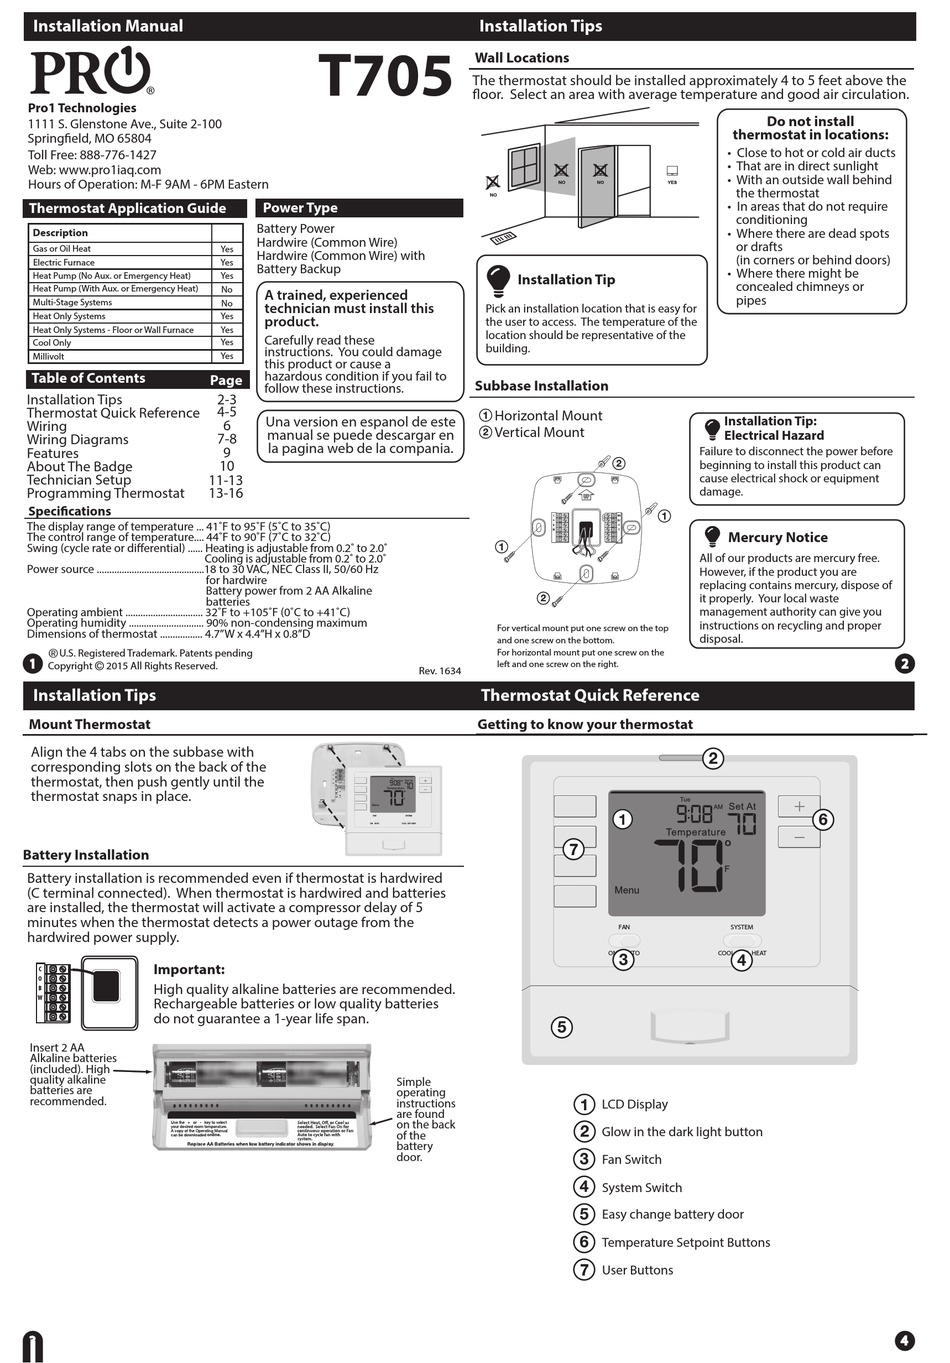 PRO1 TECHNOLOGIES T705 INSTALLATION MANUAL Pdf Download | ManualsLib